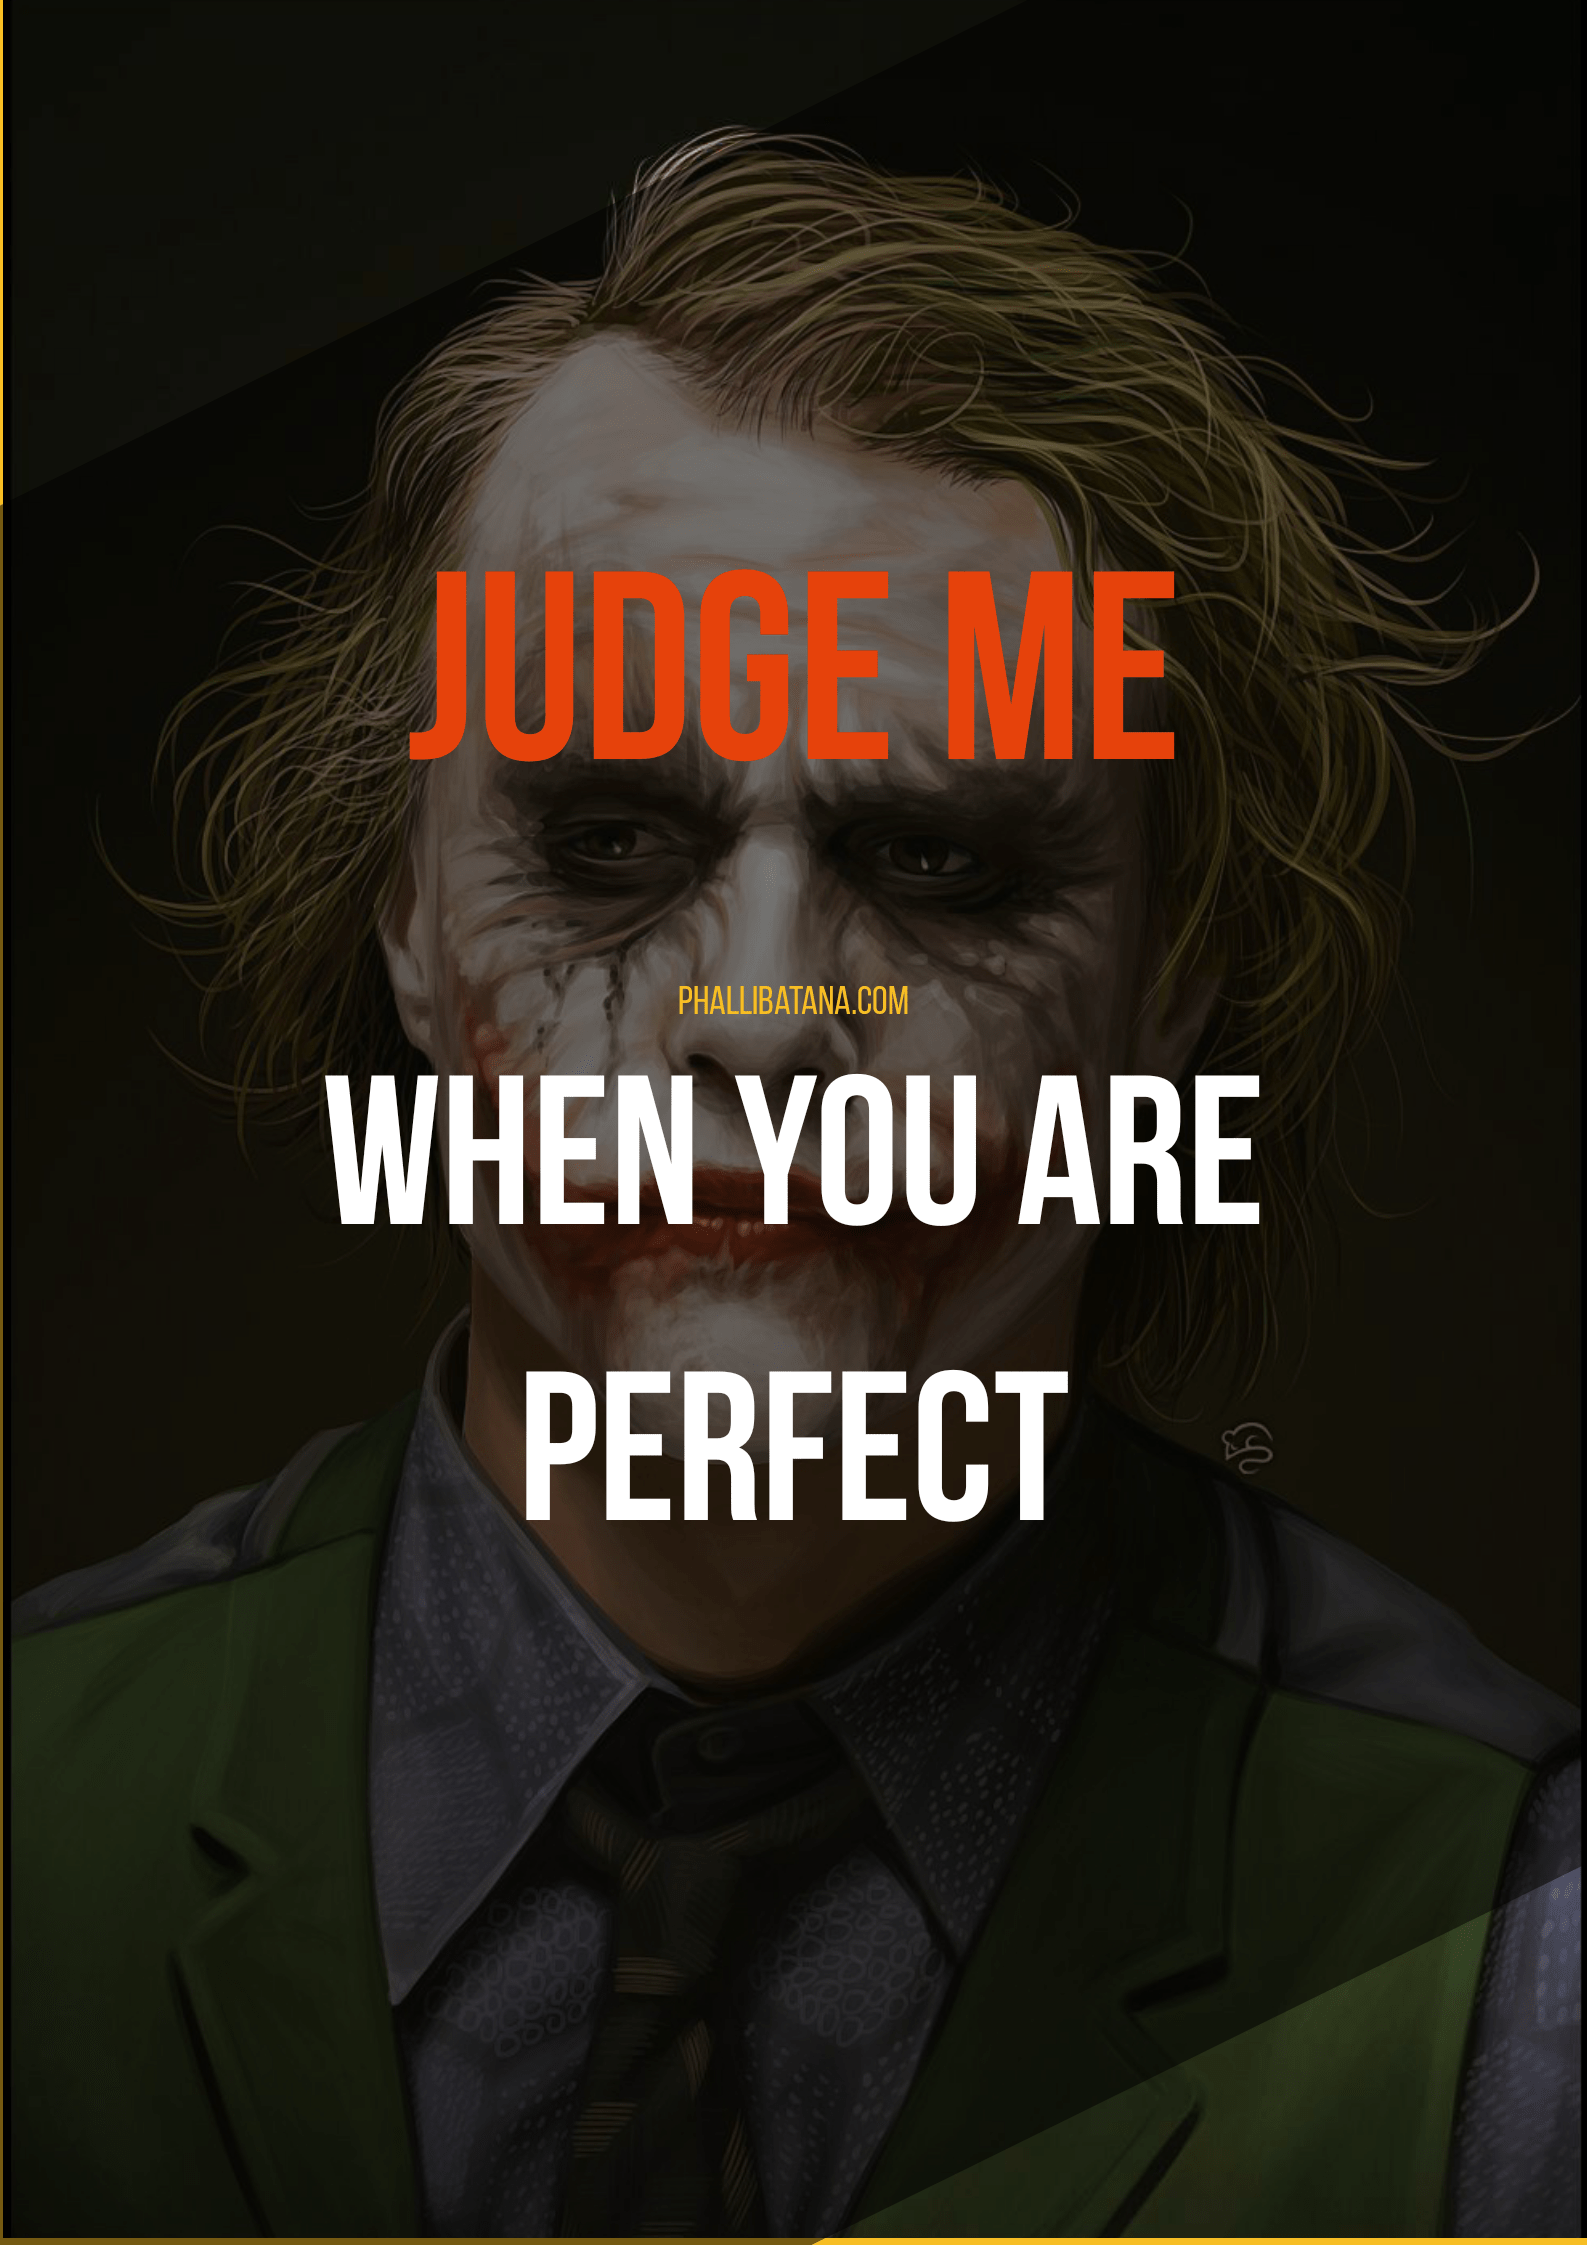 The Joker Quotes Wallpaper